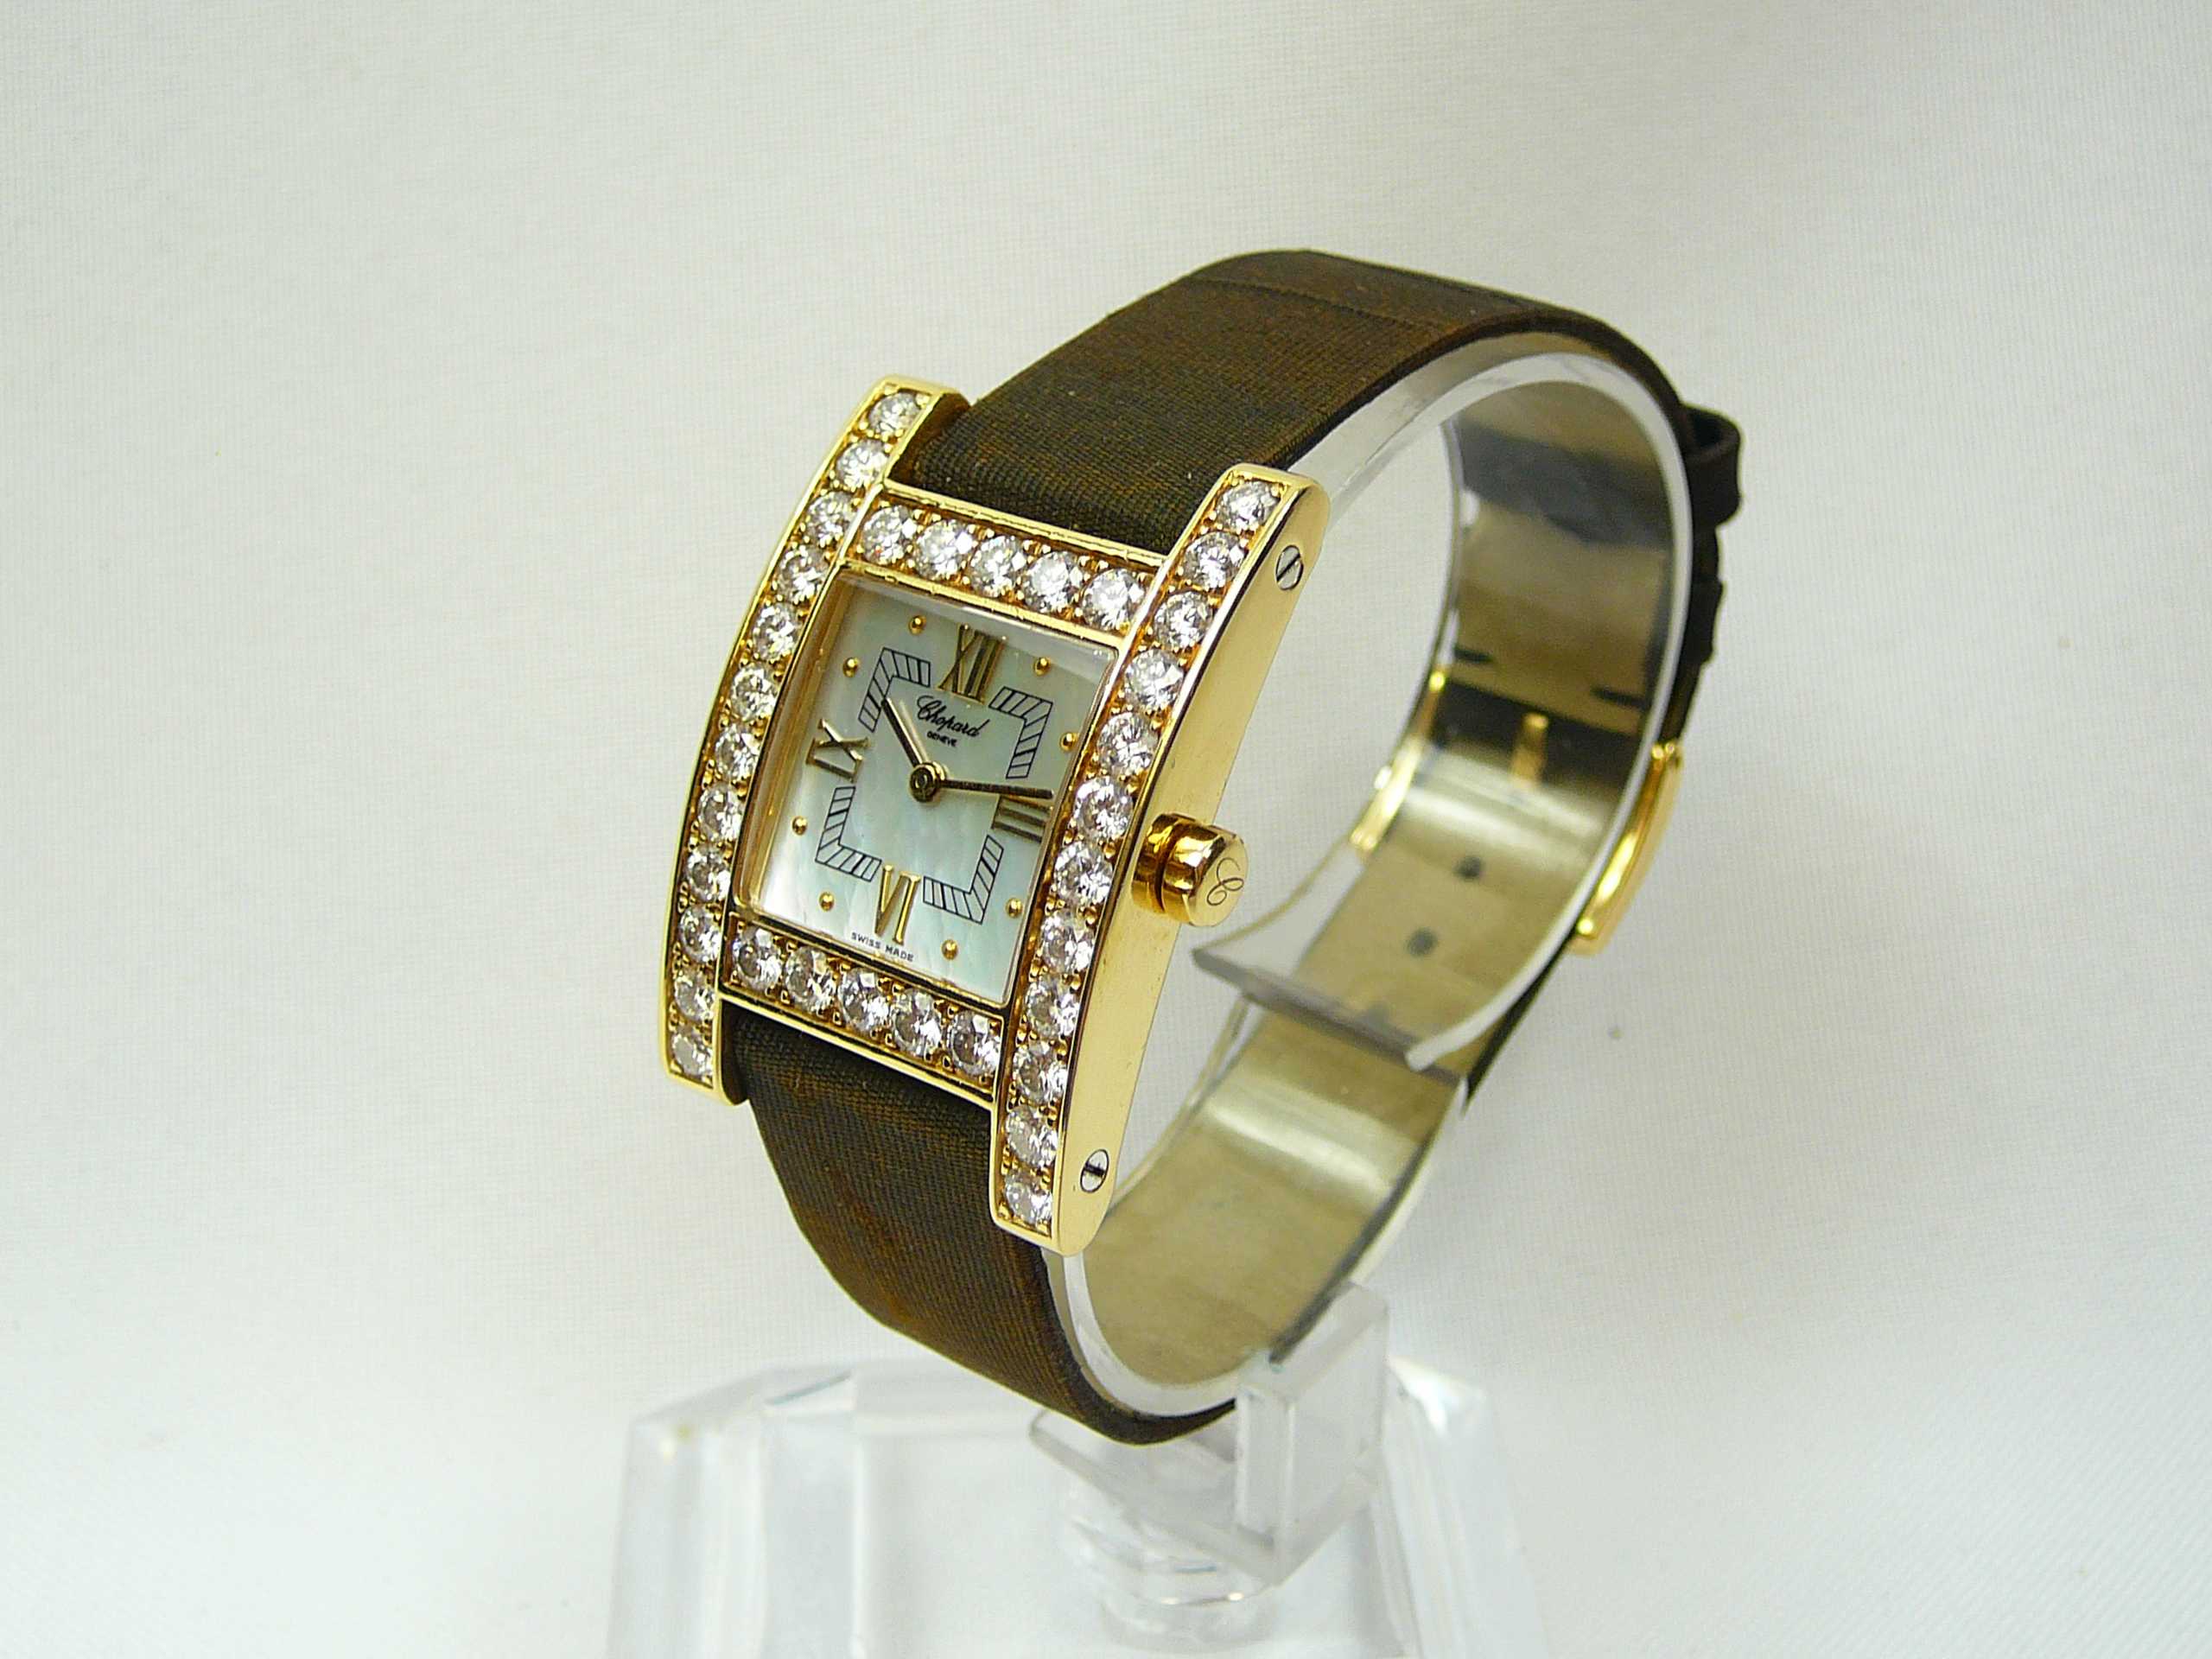 Ladies Gold Chopard Wristwatch - Image 4 of 6